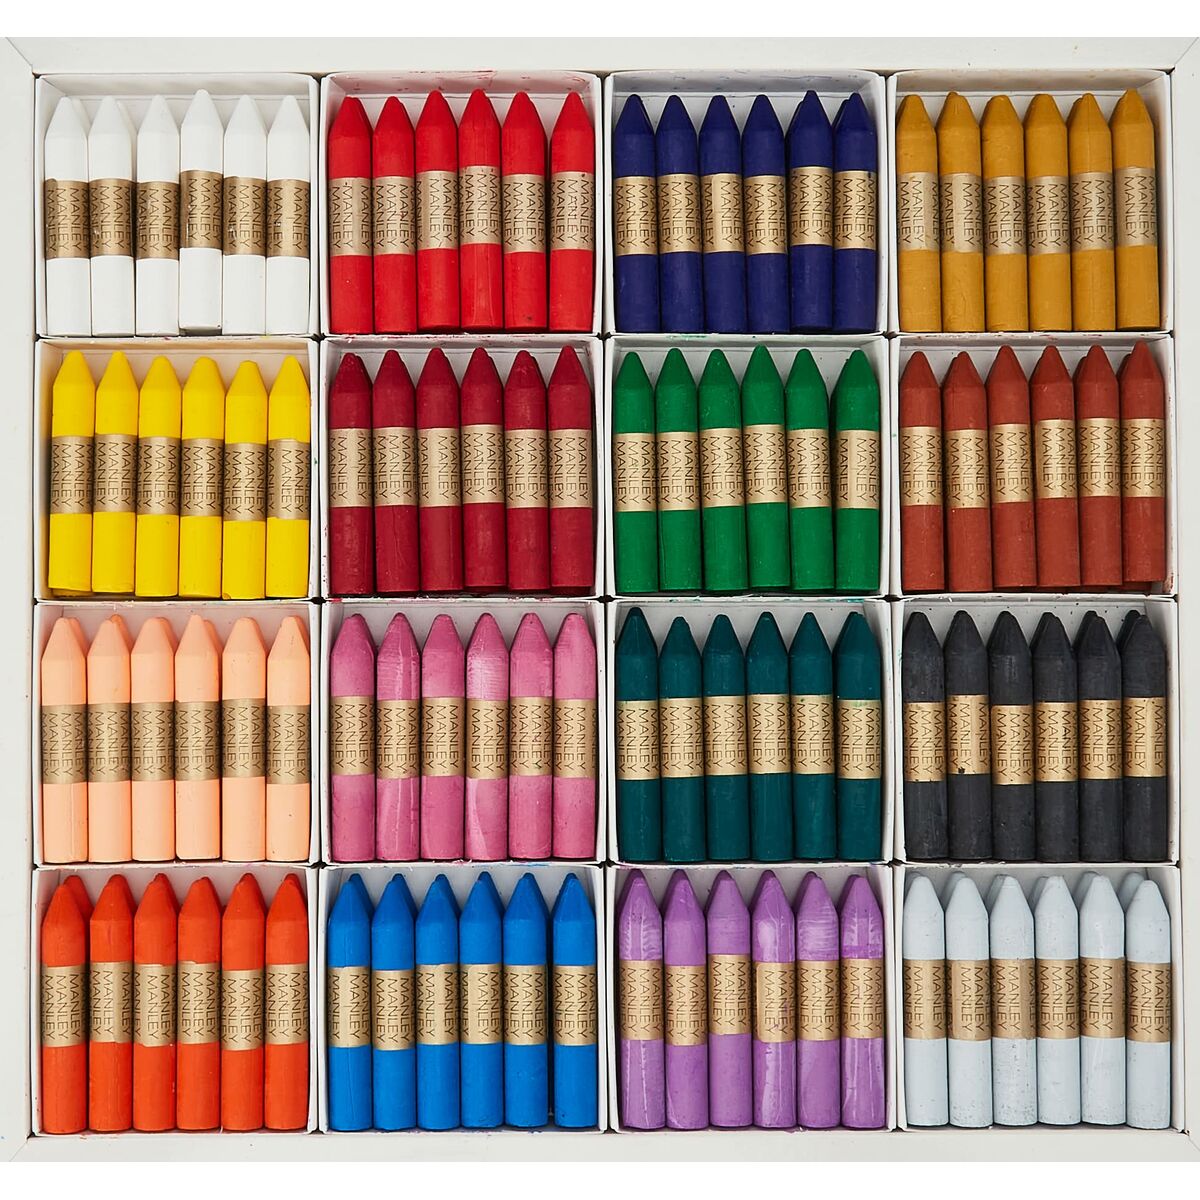 Coloured crayons Manley ClassBox 192 Pieces Multicolour